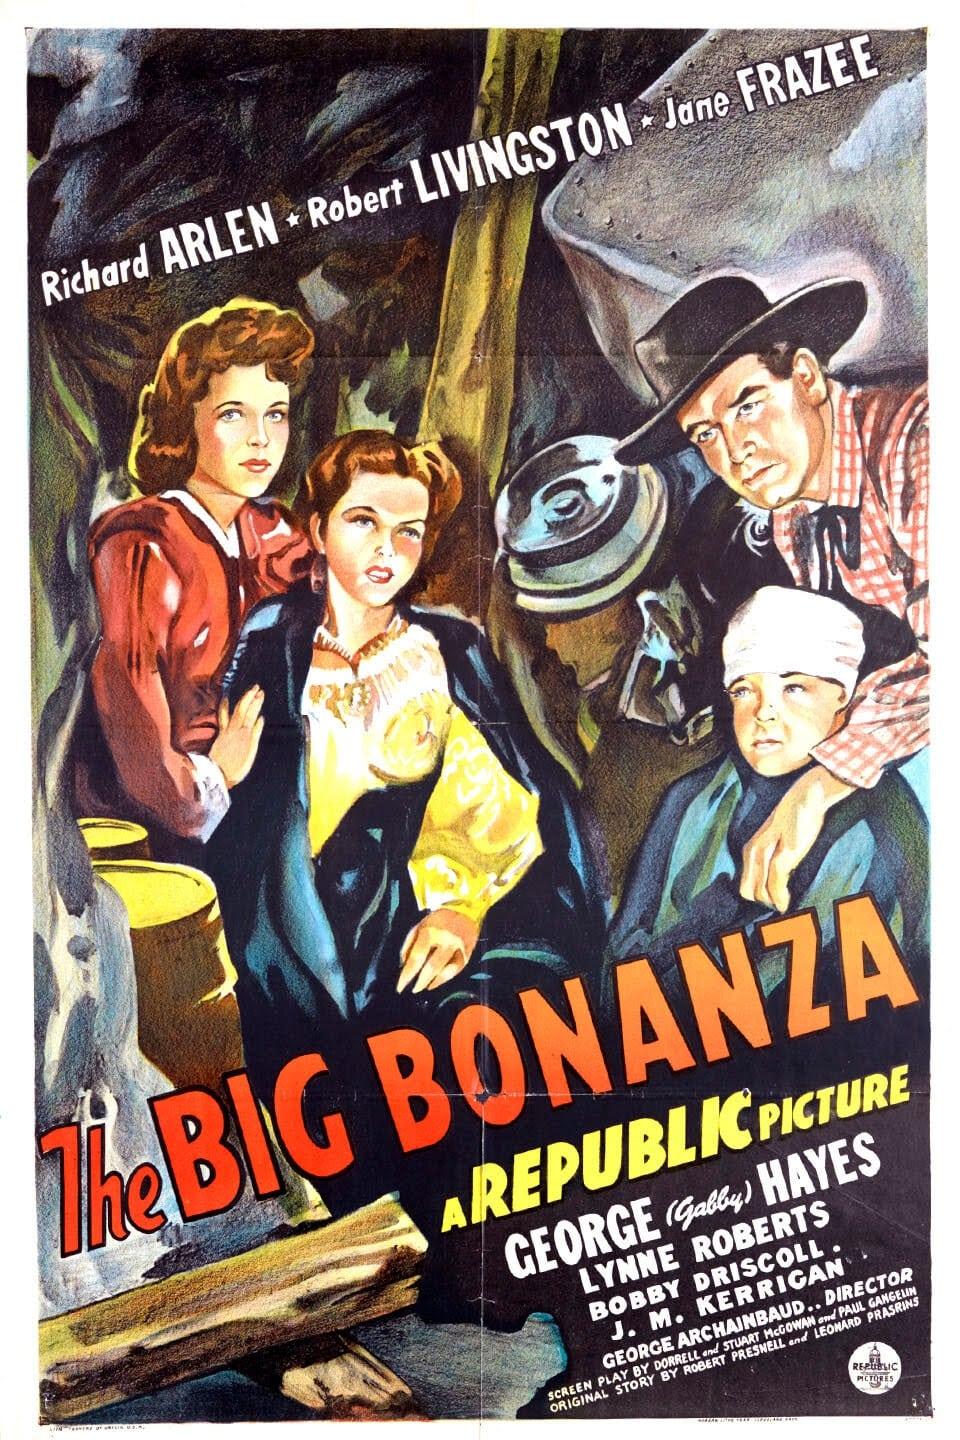 The Big Bonanza poster